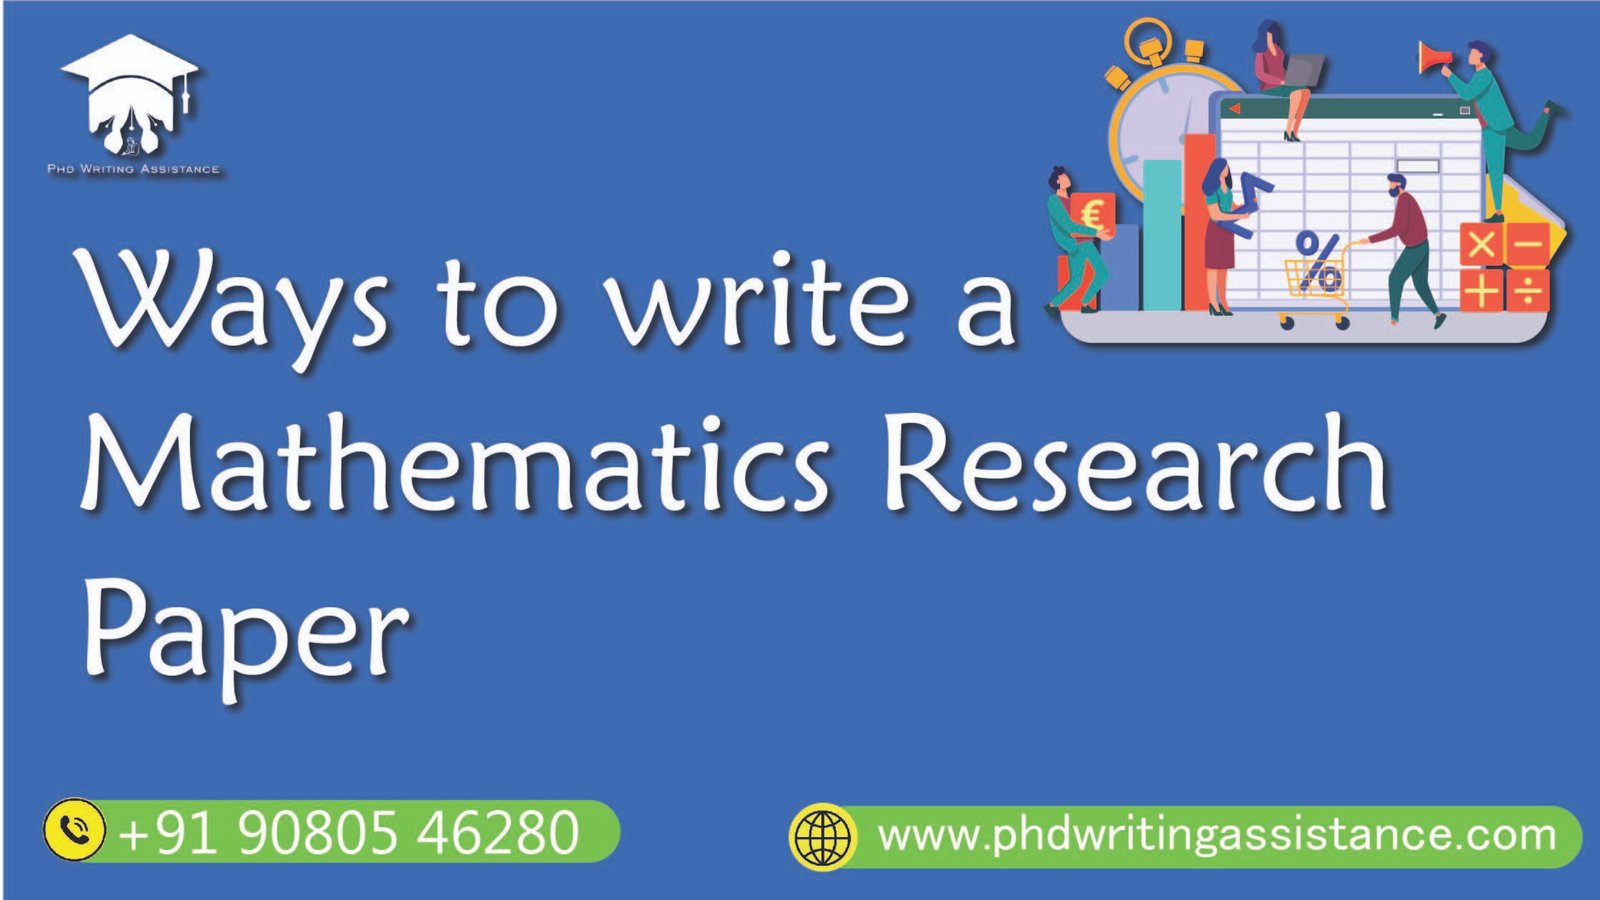 Ways to write a Mathematics Research Paper